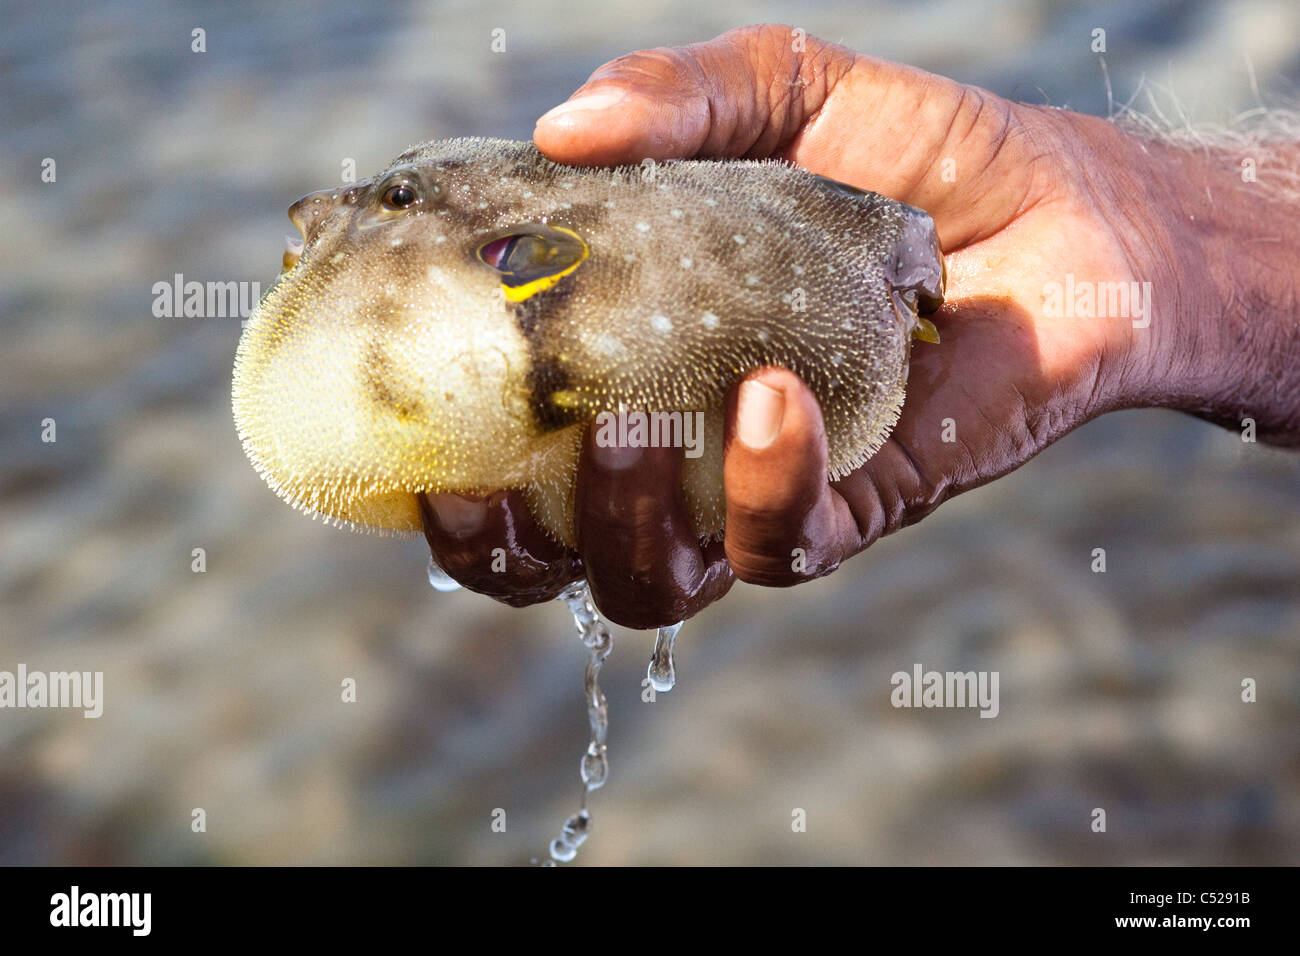 Man holding a puffer fish Stock Photo